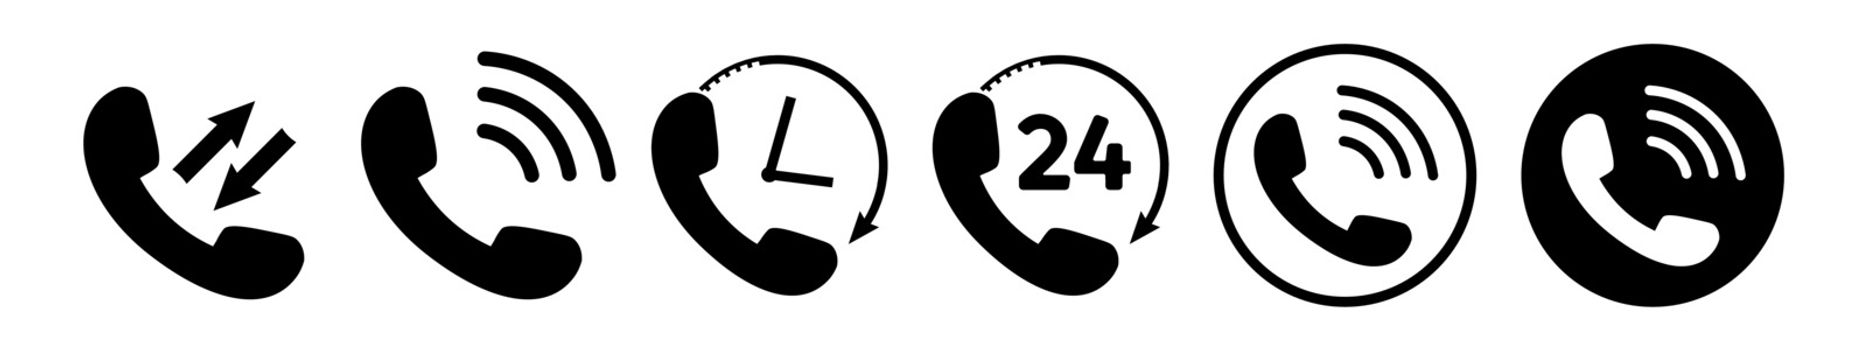 Phone Icon set. Black phone symbols